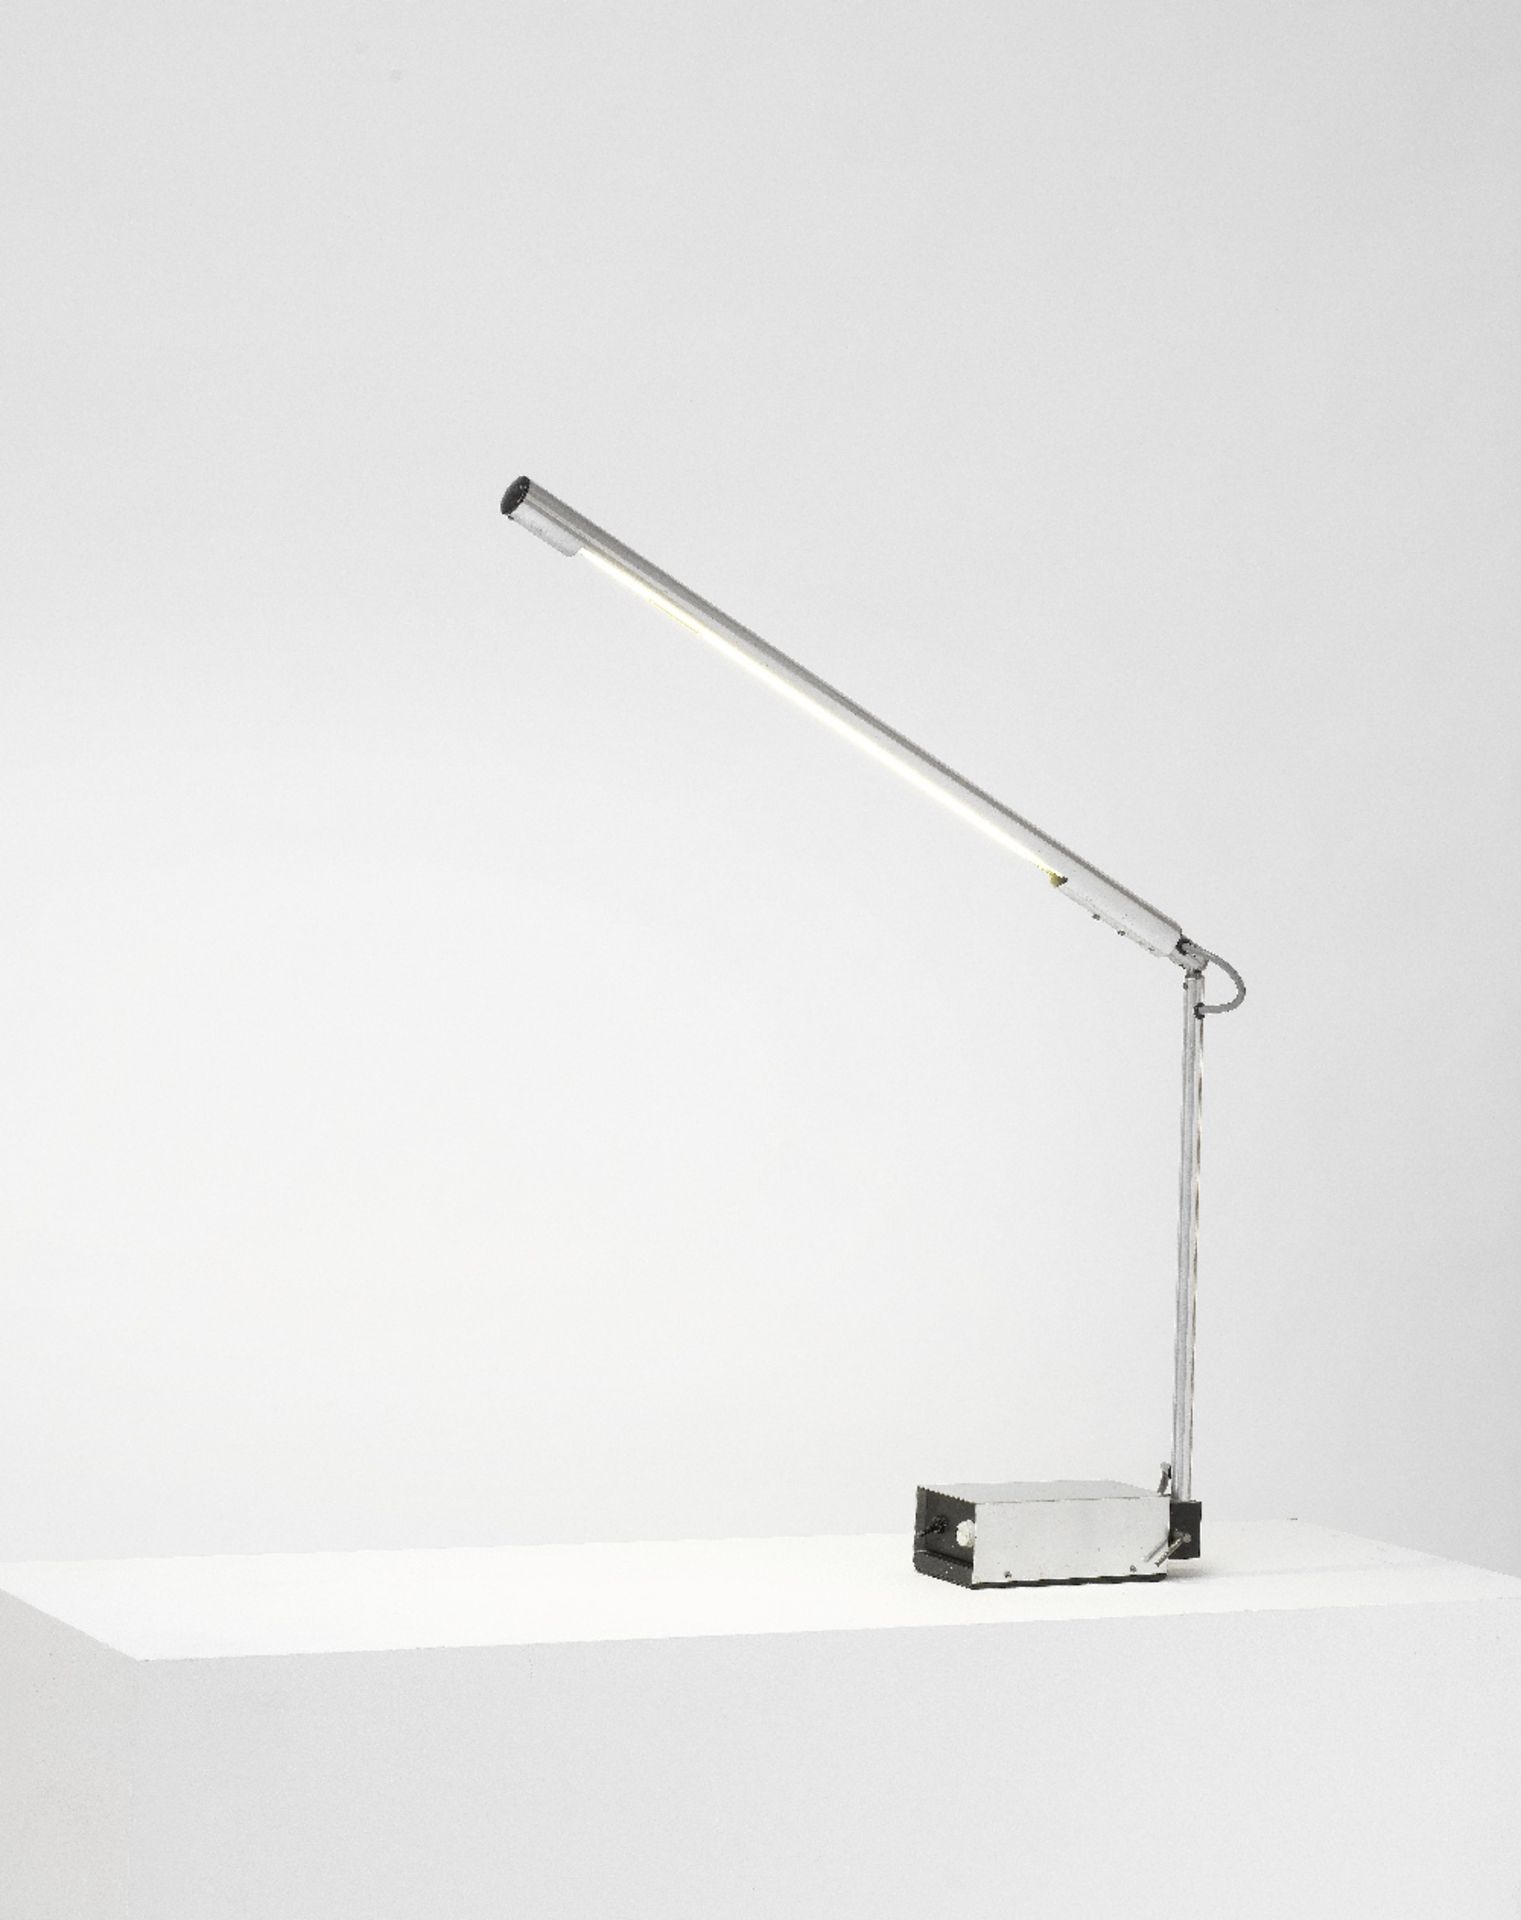 Gerald Abramovitz 'Cantilever light, Mk II', model no. 914155, circa 1964